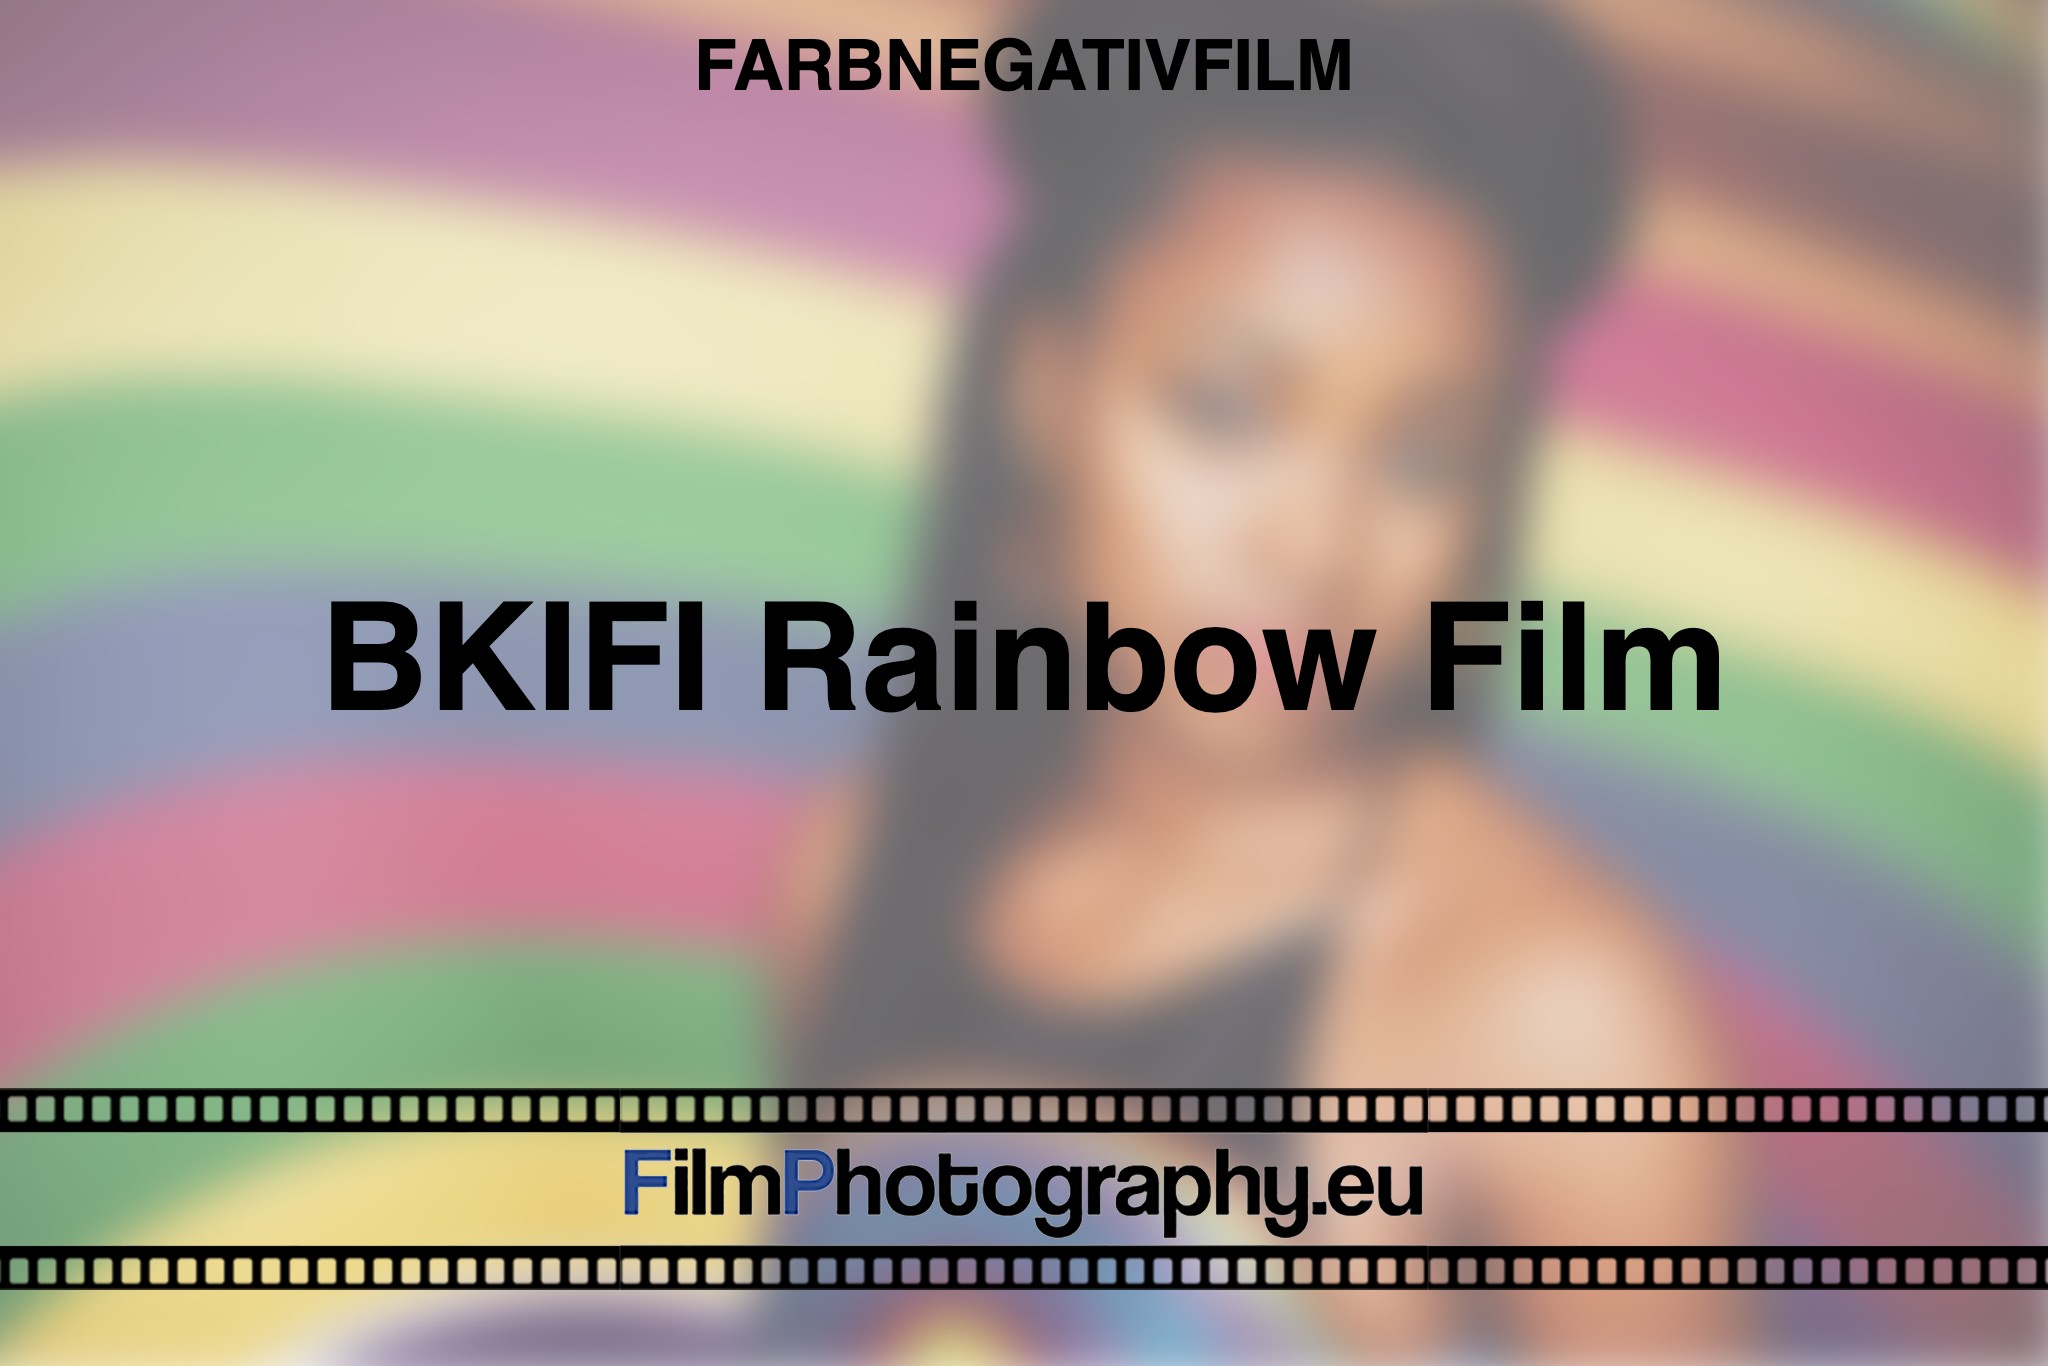 BKIFI-Rainbow-Film-Farbnegativfilm-bnv